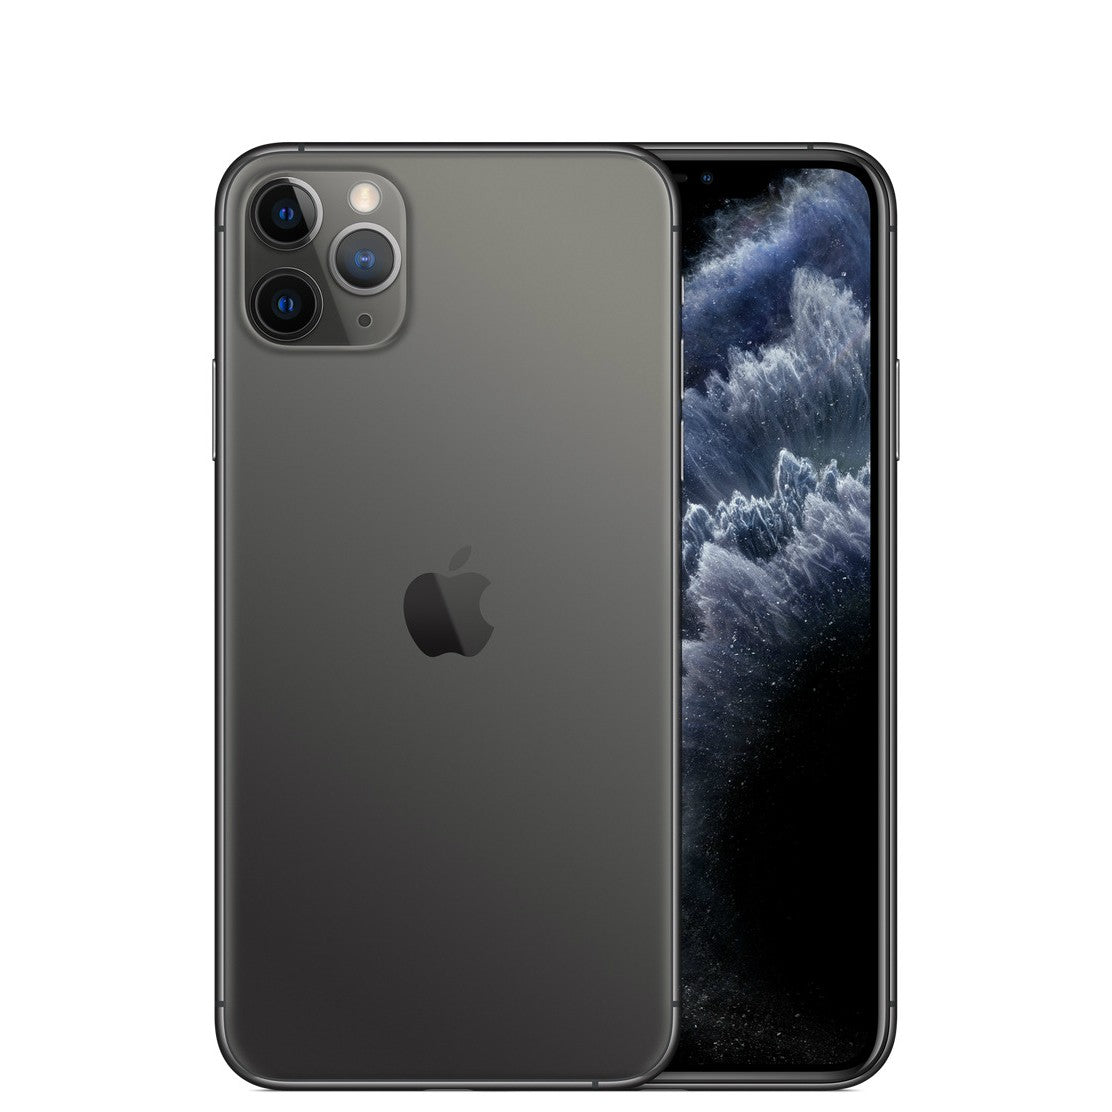 iPhone 11 Pro – Cellular Savings